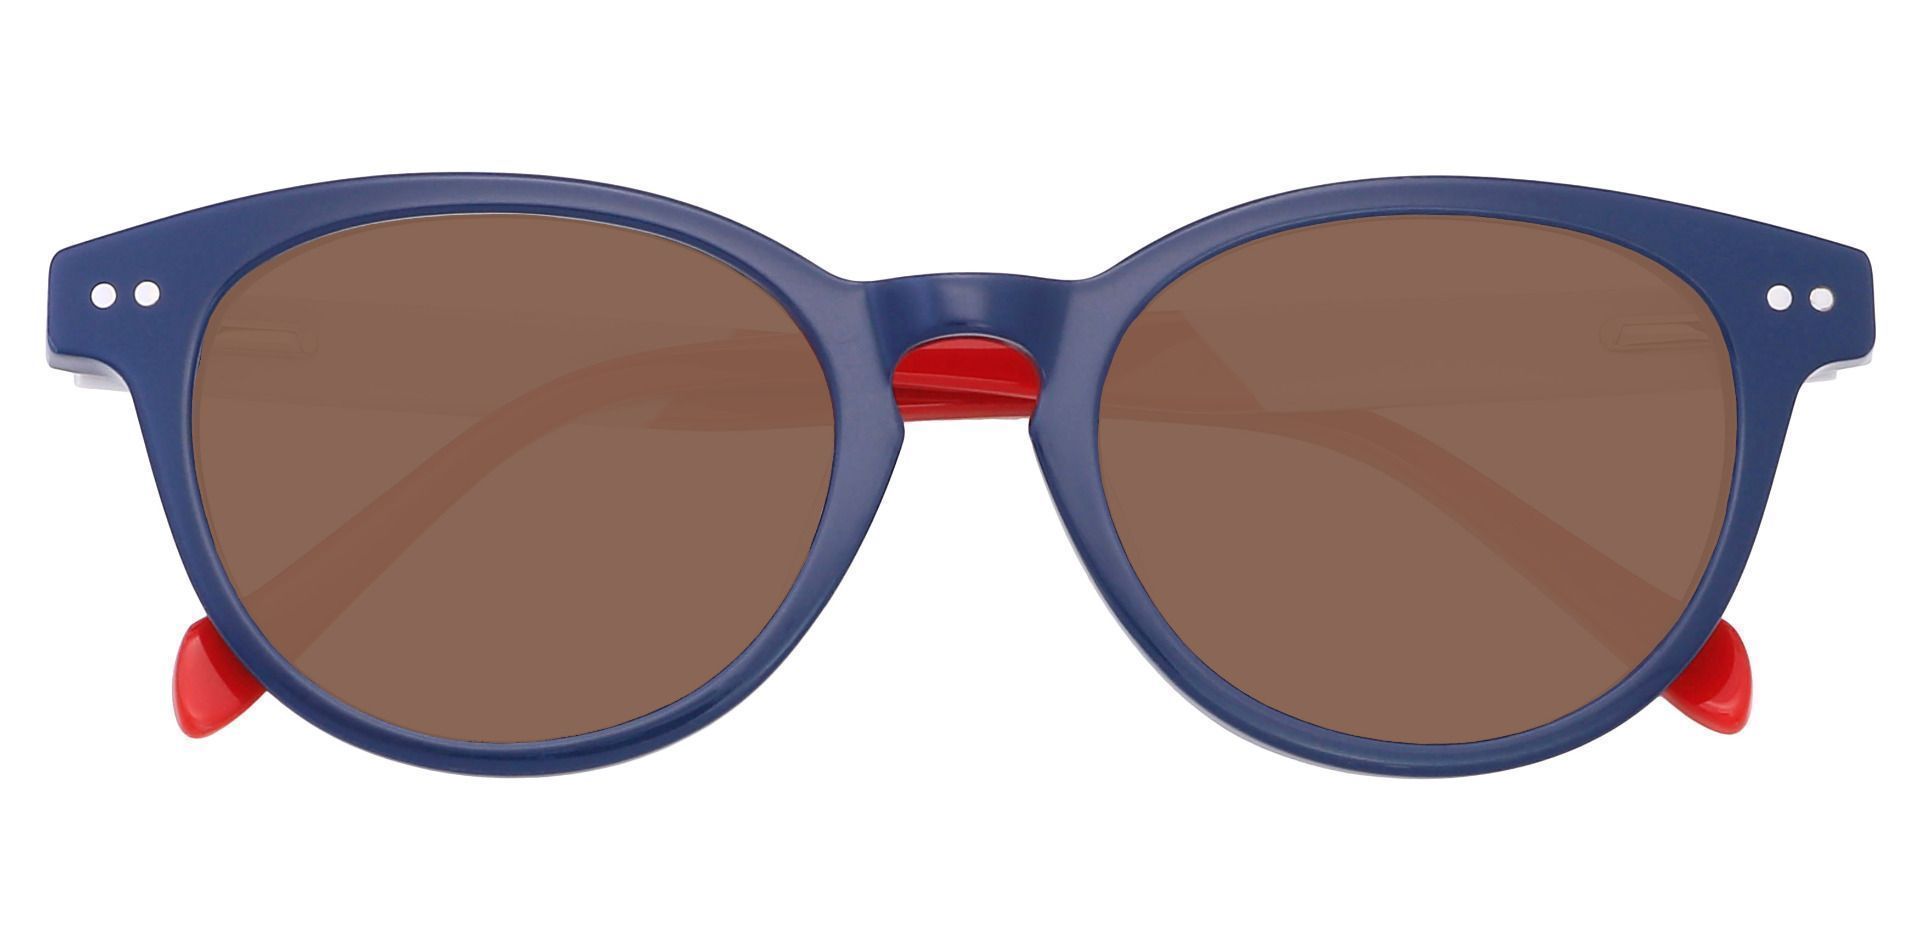 Revere Oval Prescription Sunglasses - Blue Frame With Brown Lenses